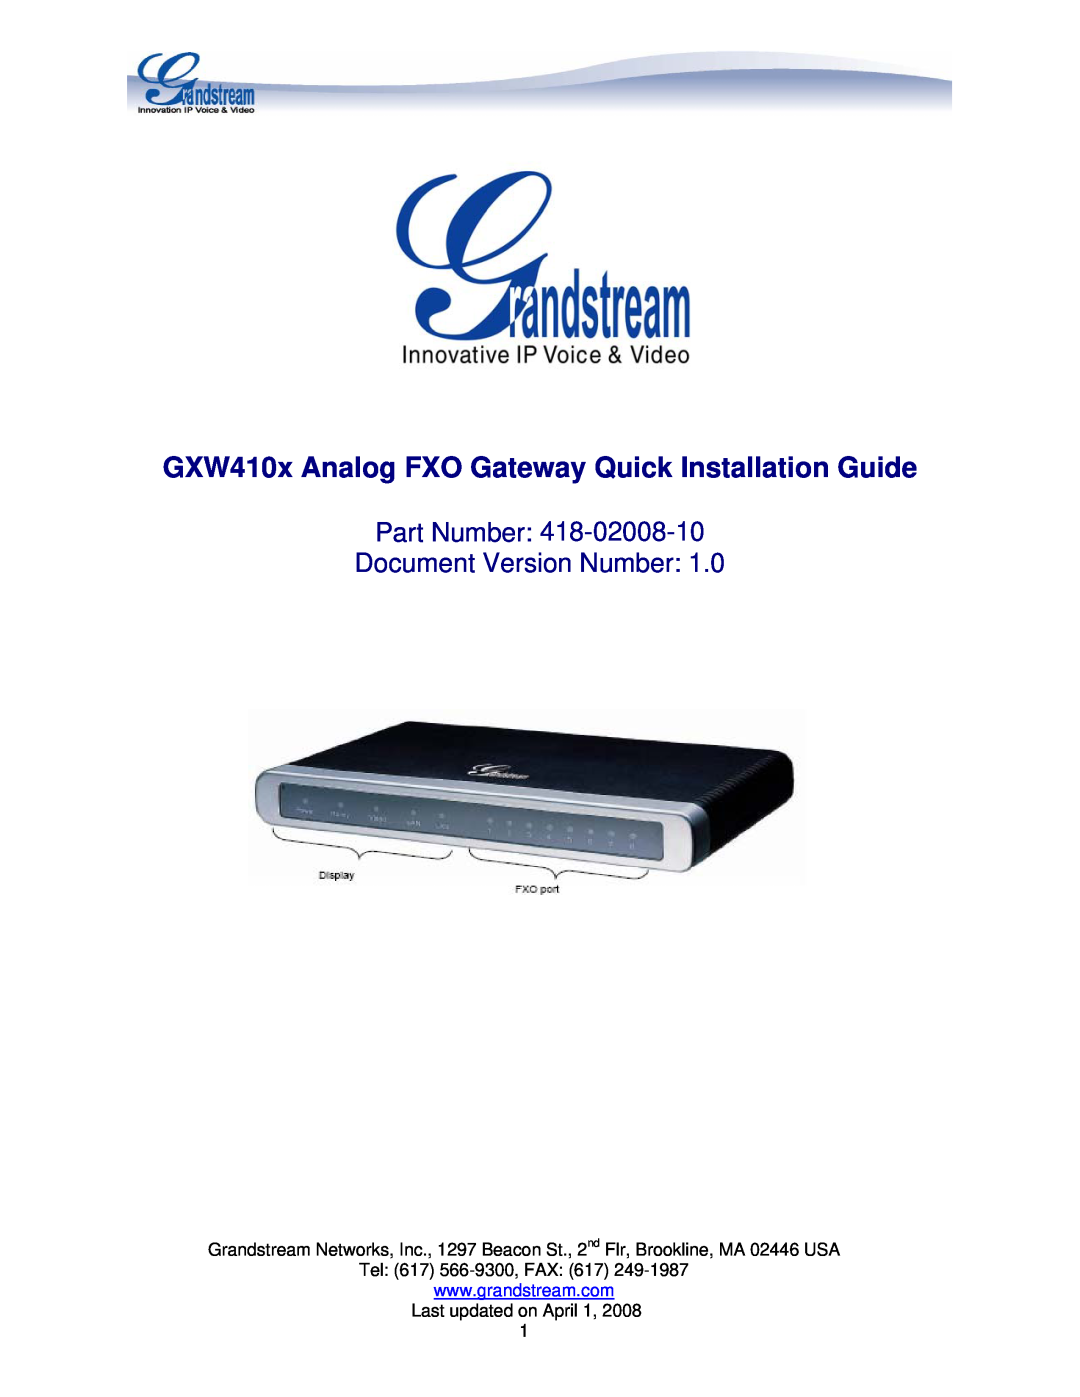 Grandstream Networks GXW410X manual GXW410x Analog FXO Gateway Quick Installation Guide 